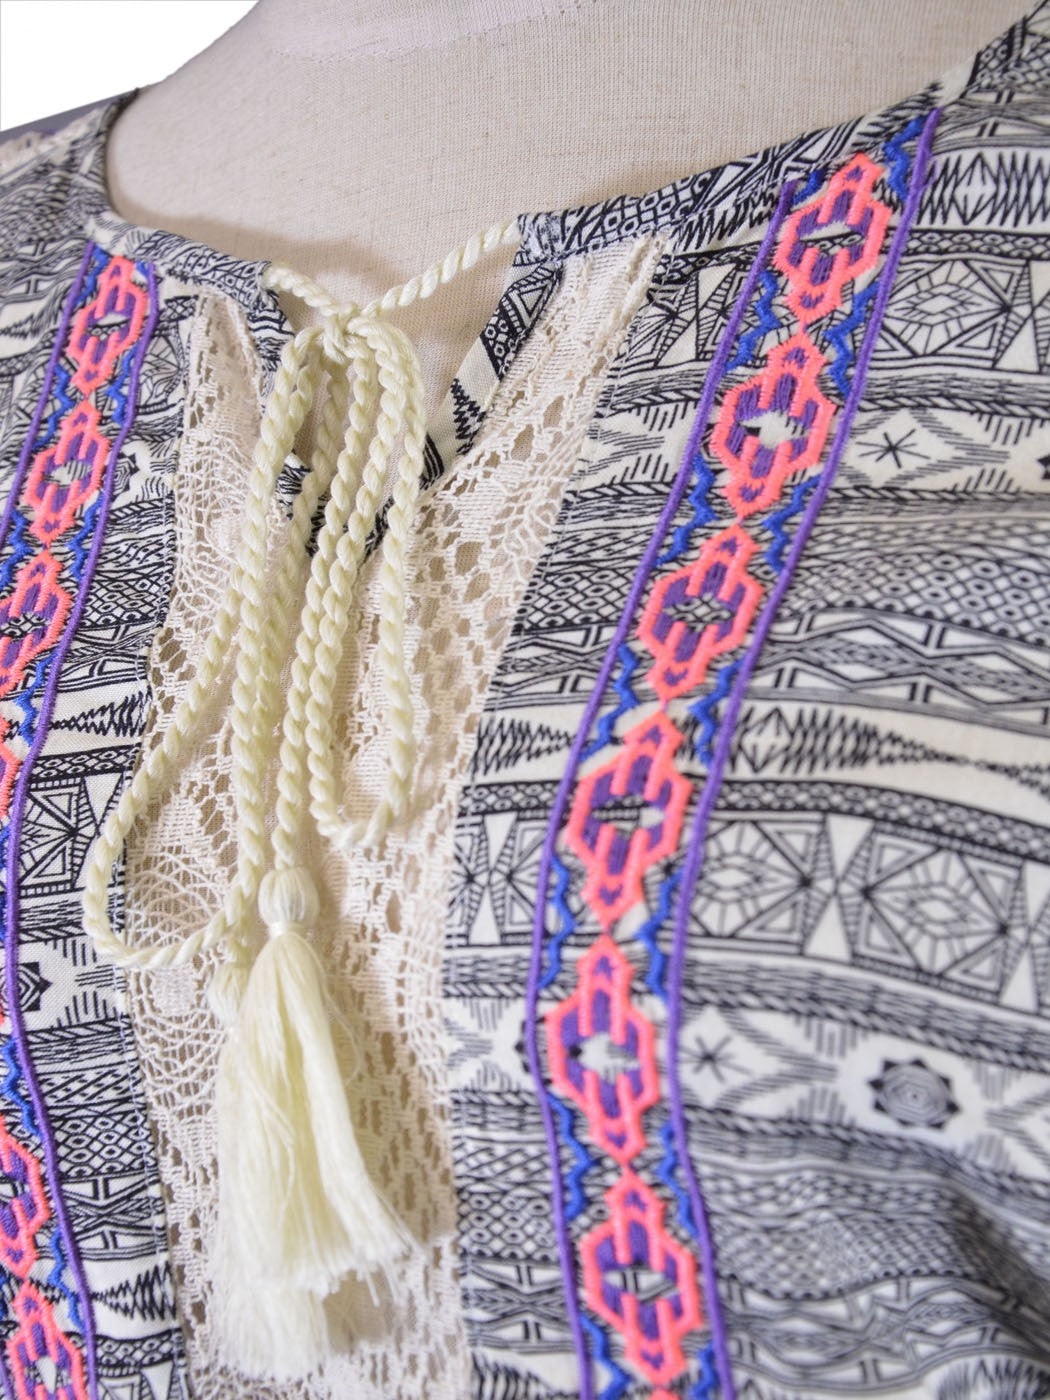 Flying Tomato Gypsy Tribal Print Contrast Fabric Smock Waist Sleeve Woven Dress